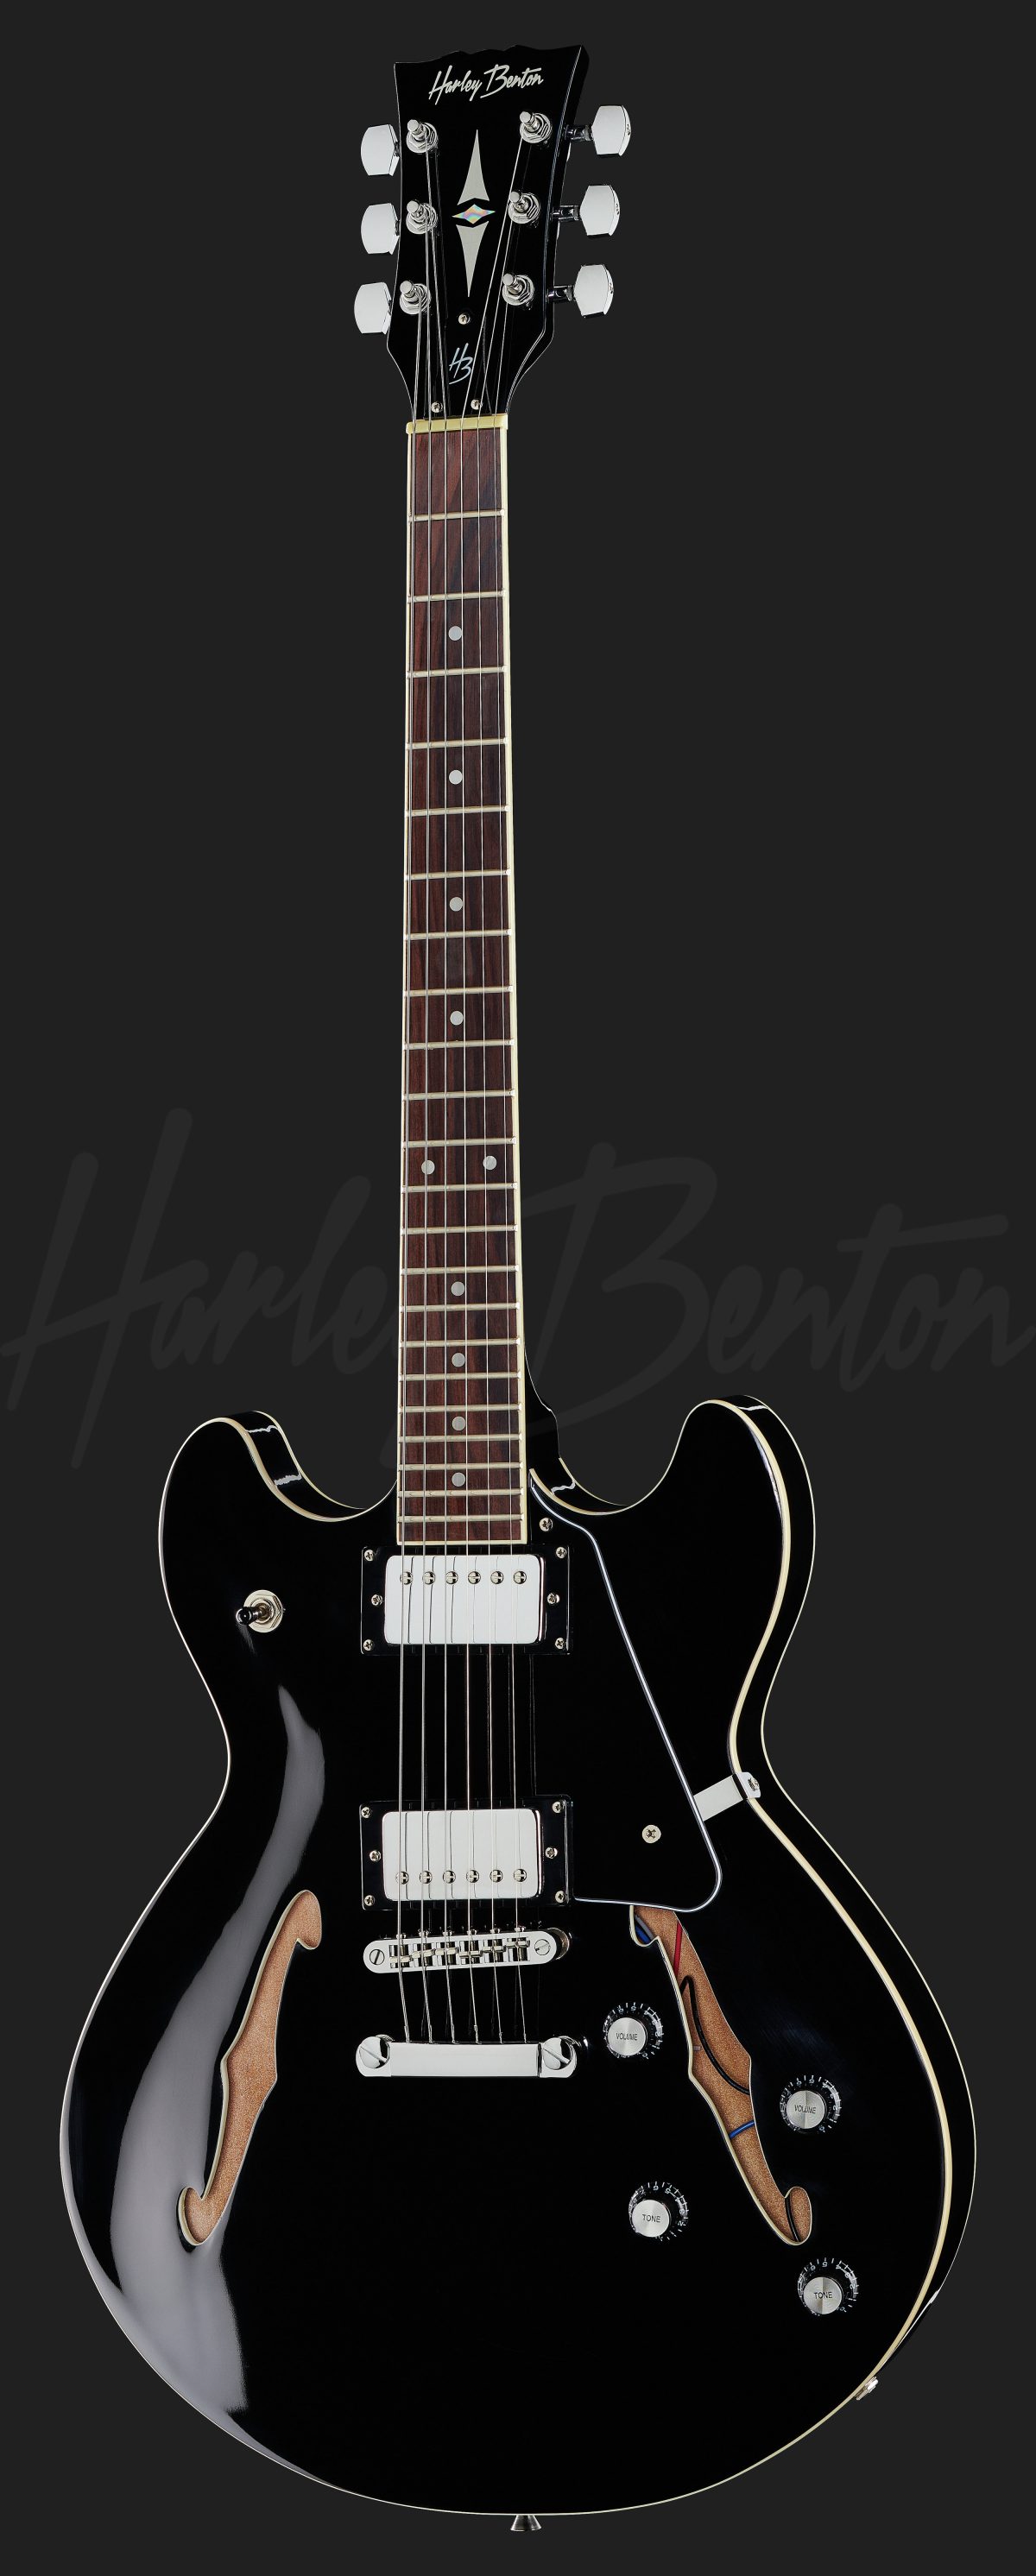 HB-35 BK - Harley Benton